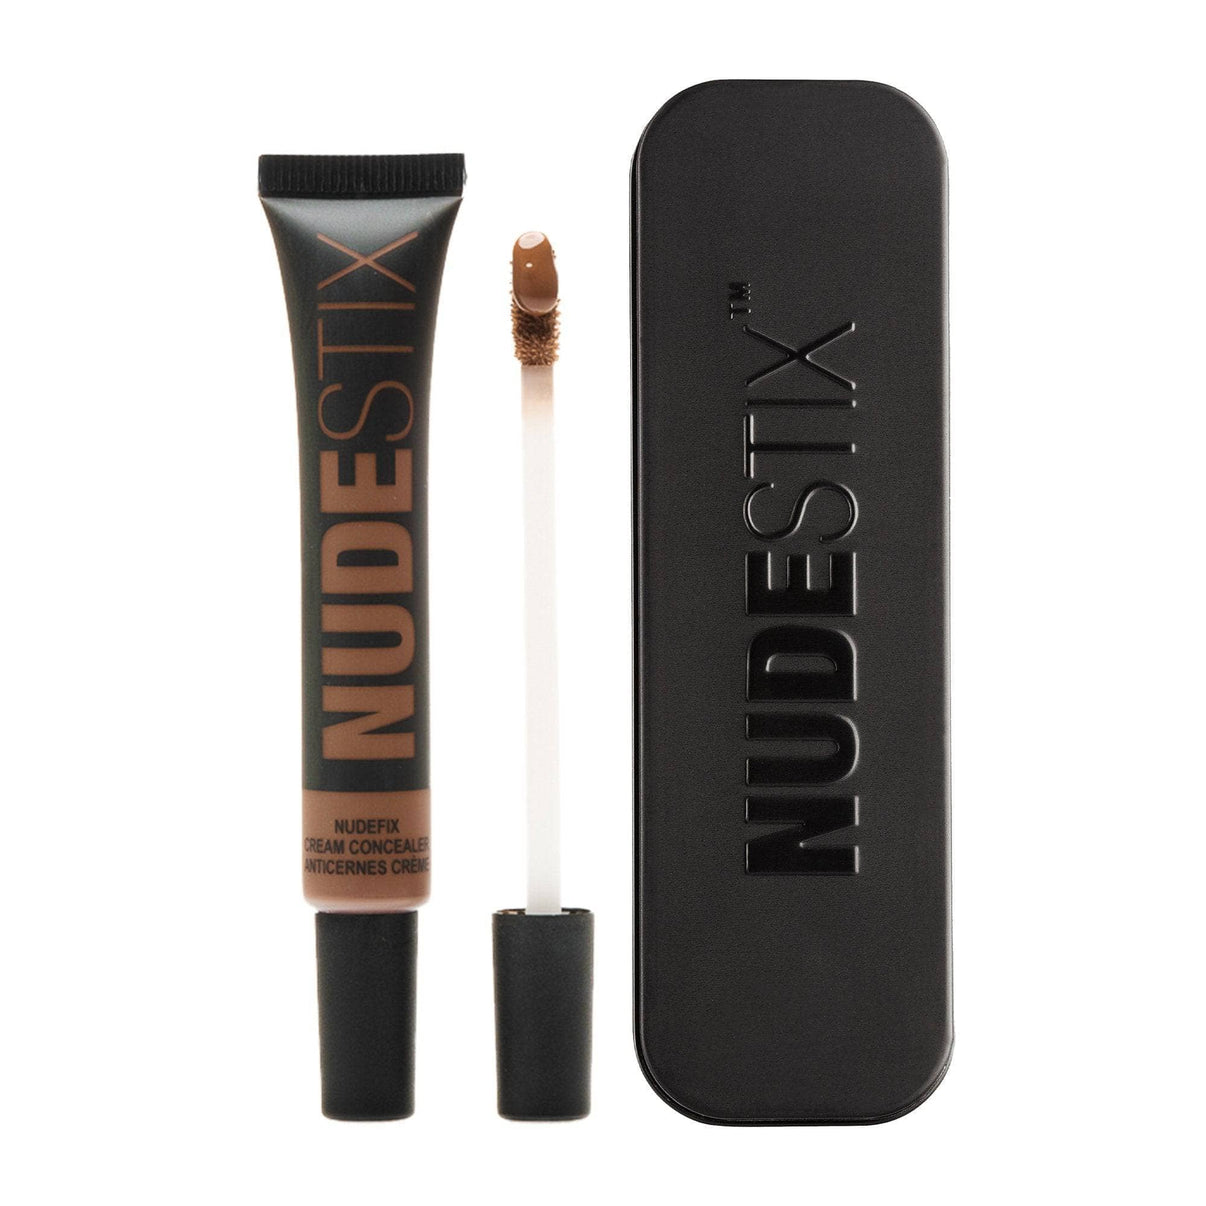 Nudefix cream concealer in shade nude 11 with Nudestix can